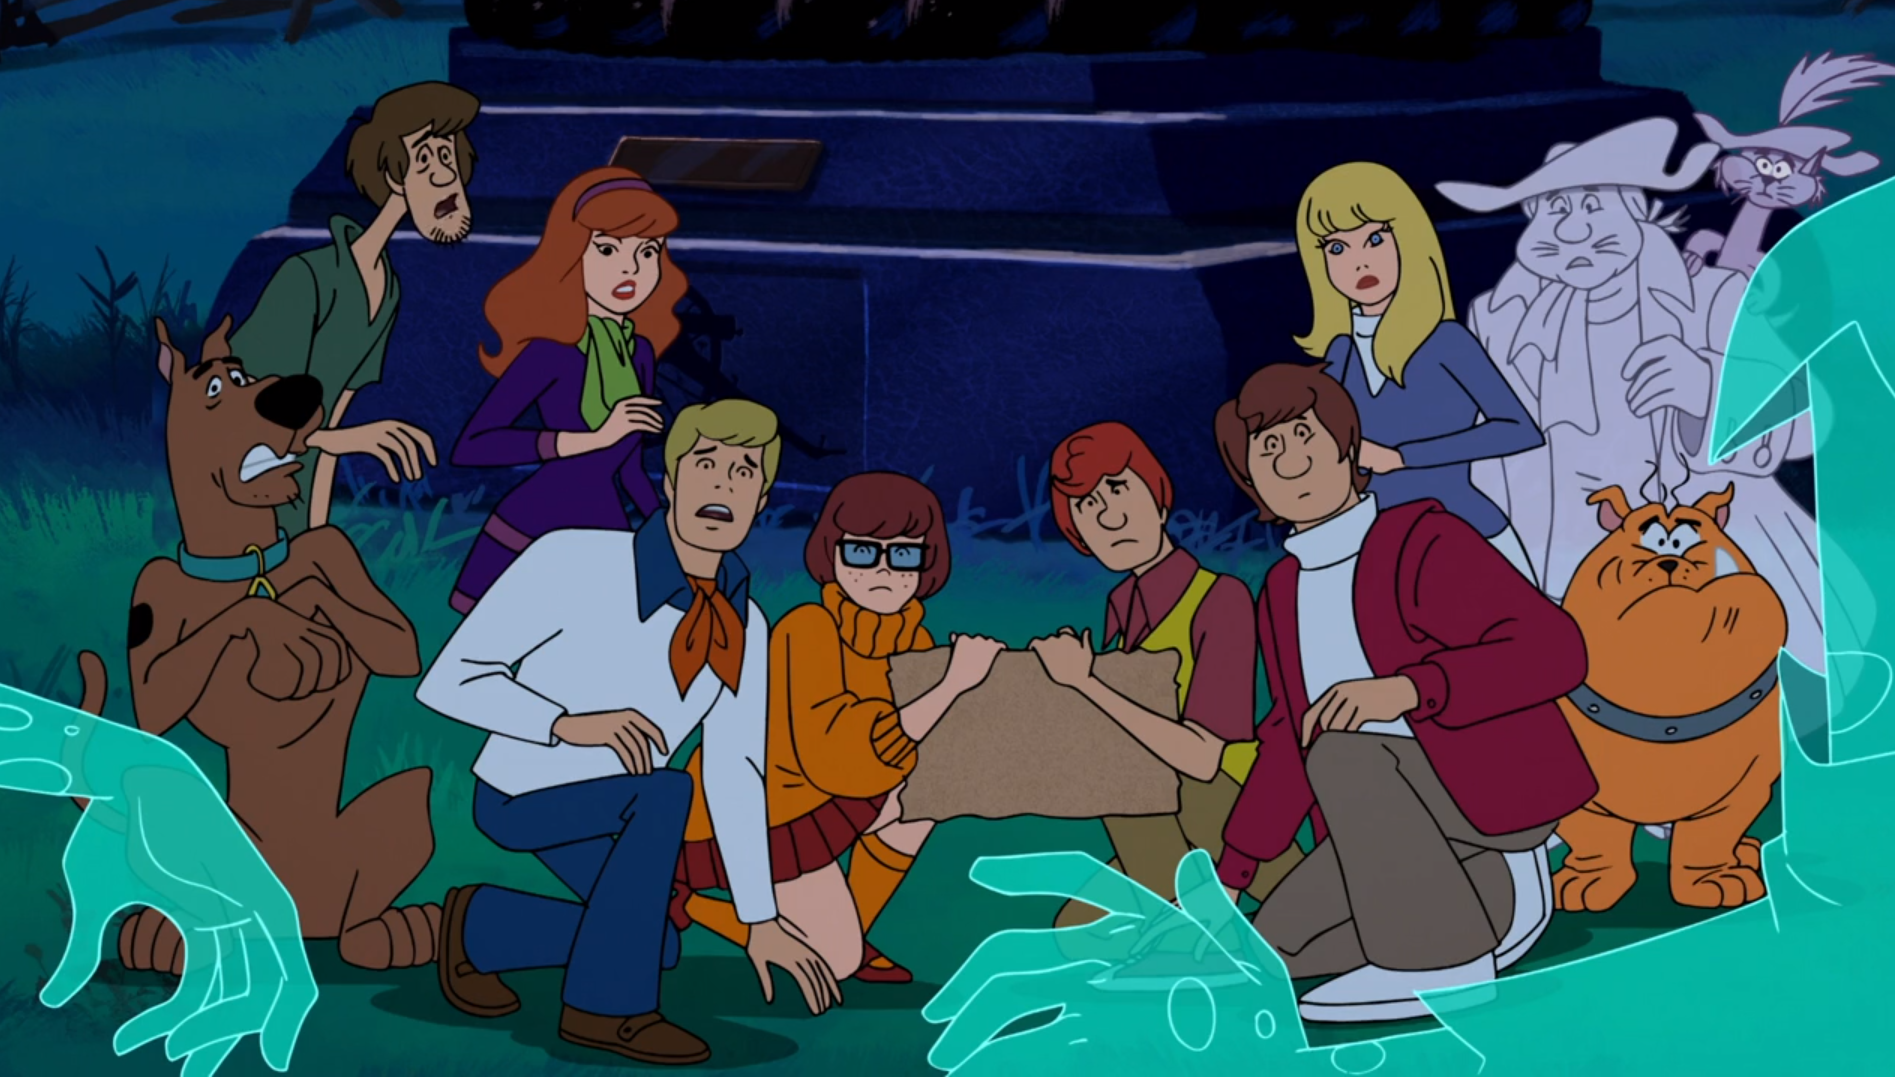 Scooby doo 2002 г. Скуби Ду. Шегги 2021 Скуби Ду. Команда Скуби Ду. Скуби Ду команда тайна.